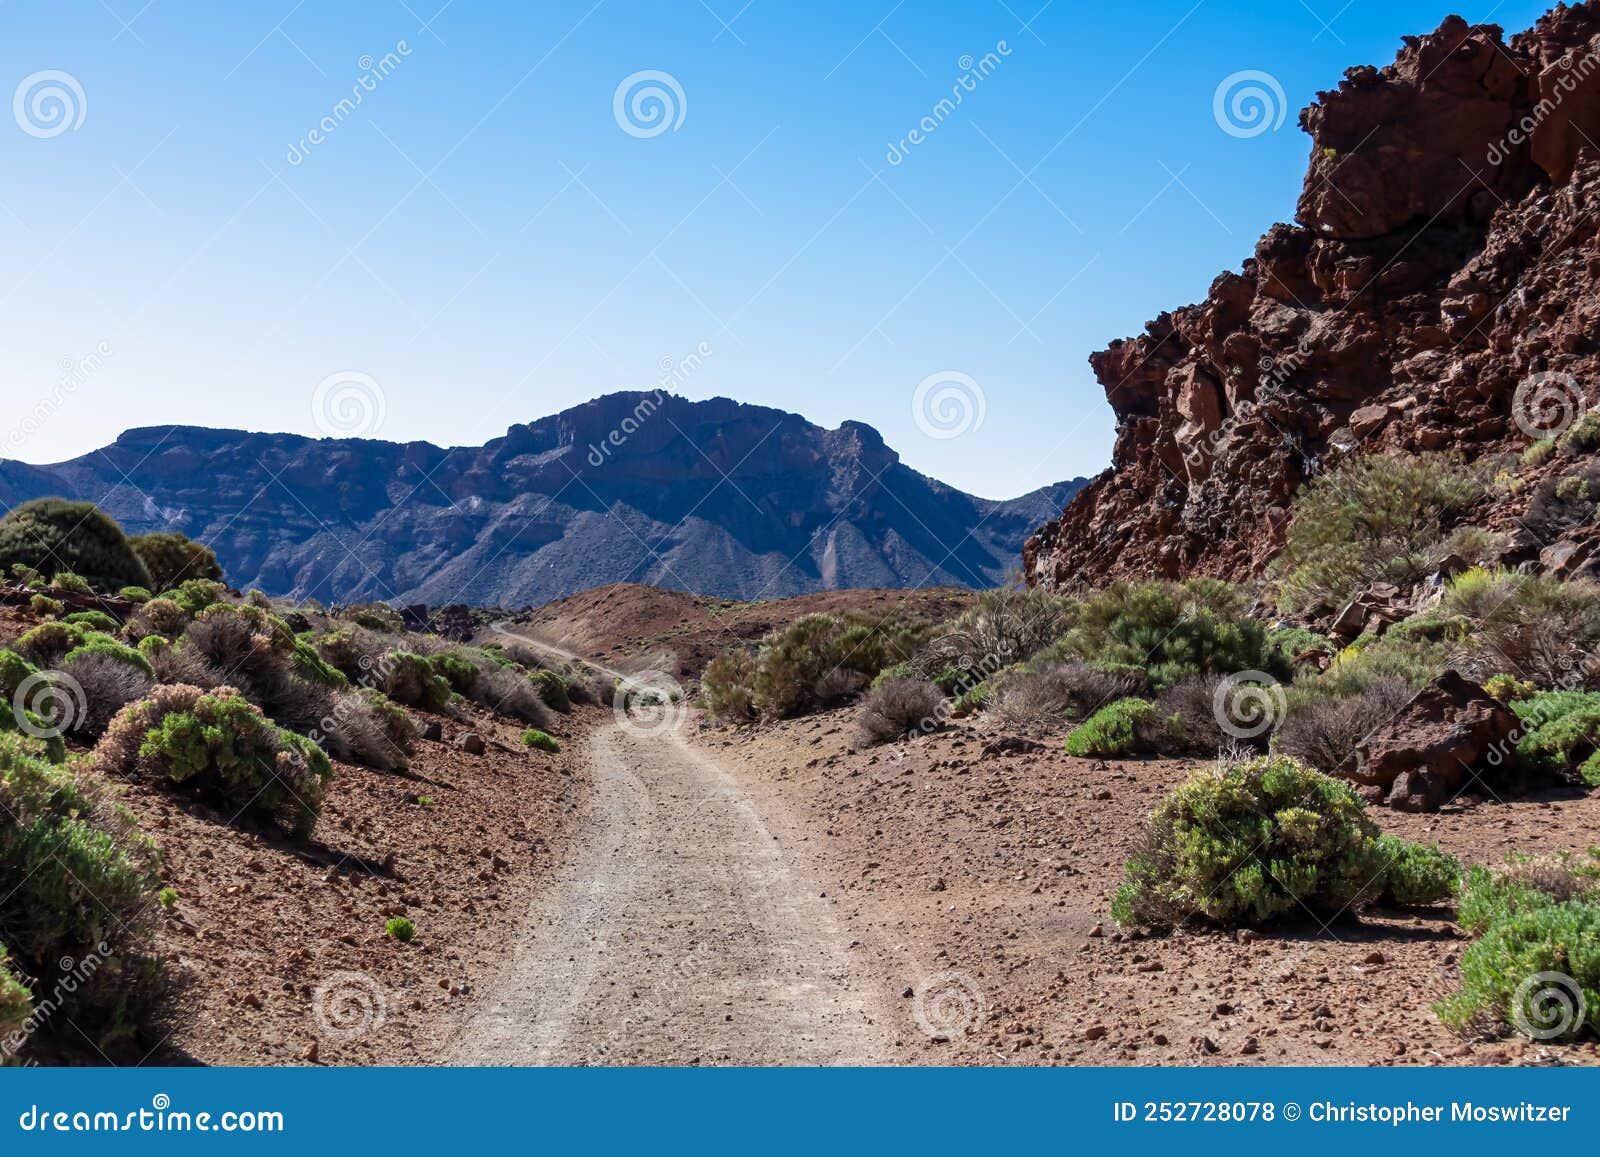 teide - panoramic hiking trail through a canyon near montana majua in volcano mount teide national park, tenerife, spain